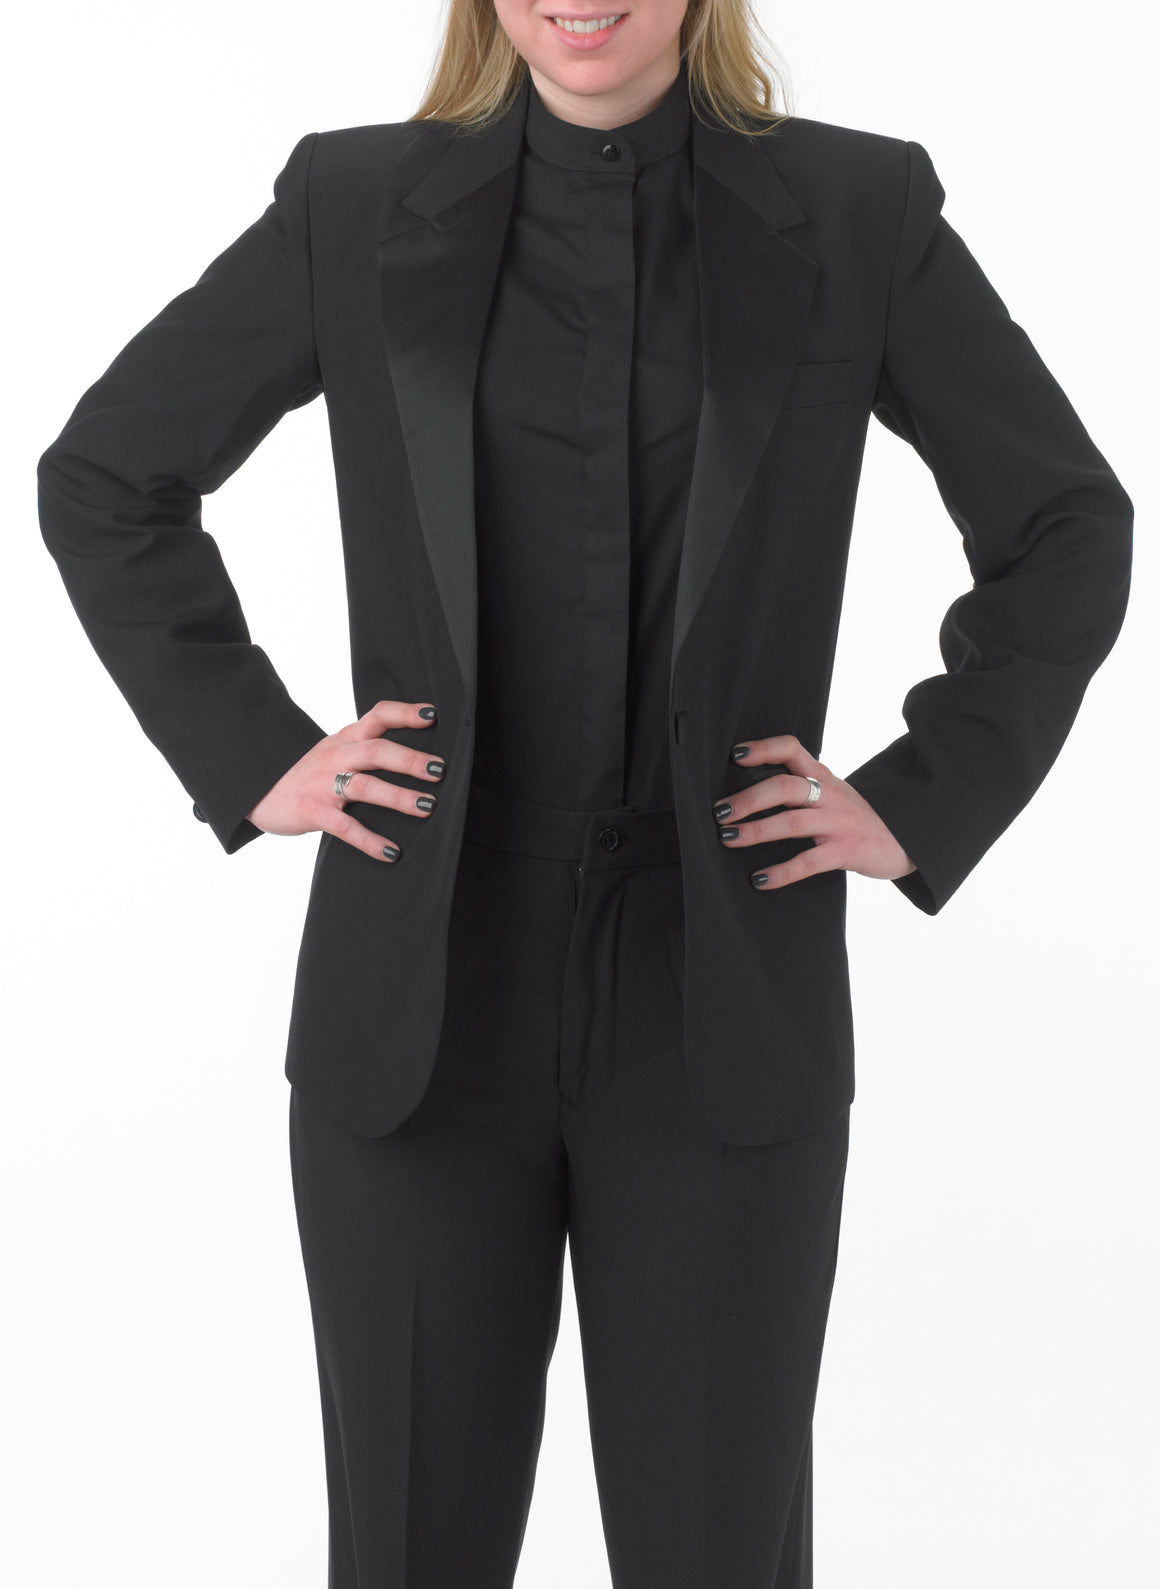 Women's Black Eton Jacket with Black Satin Shawl Lapel - 99tux